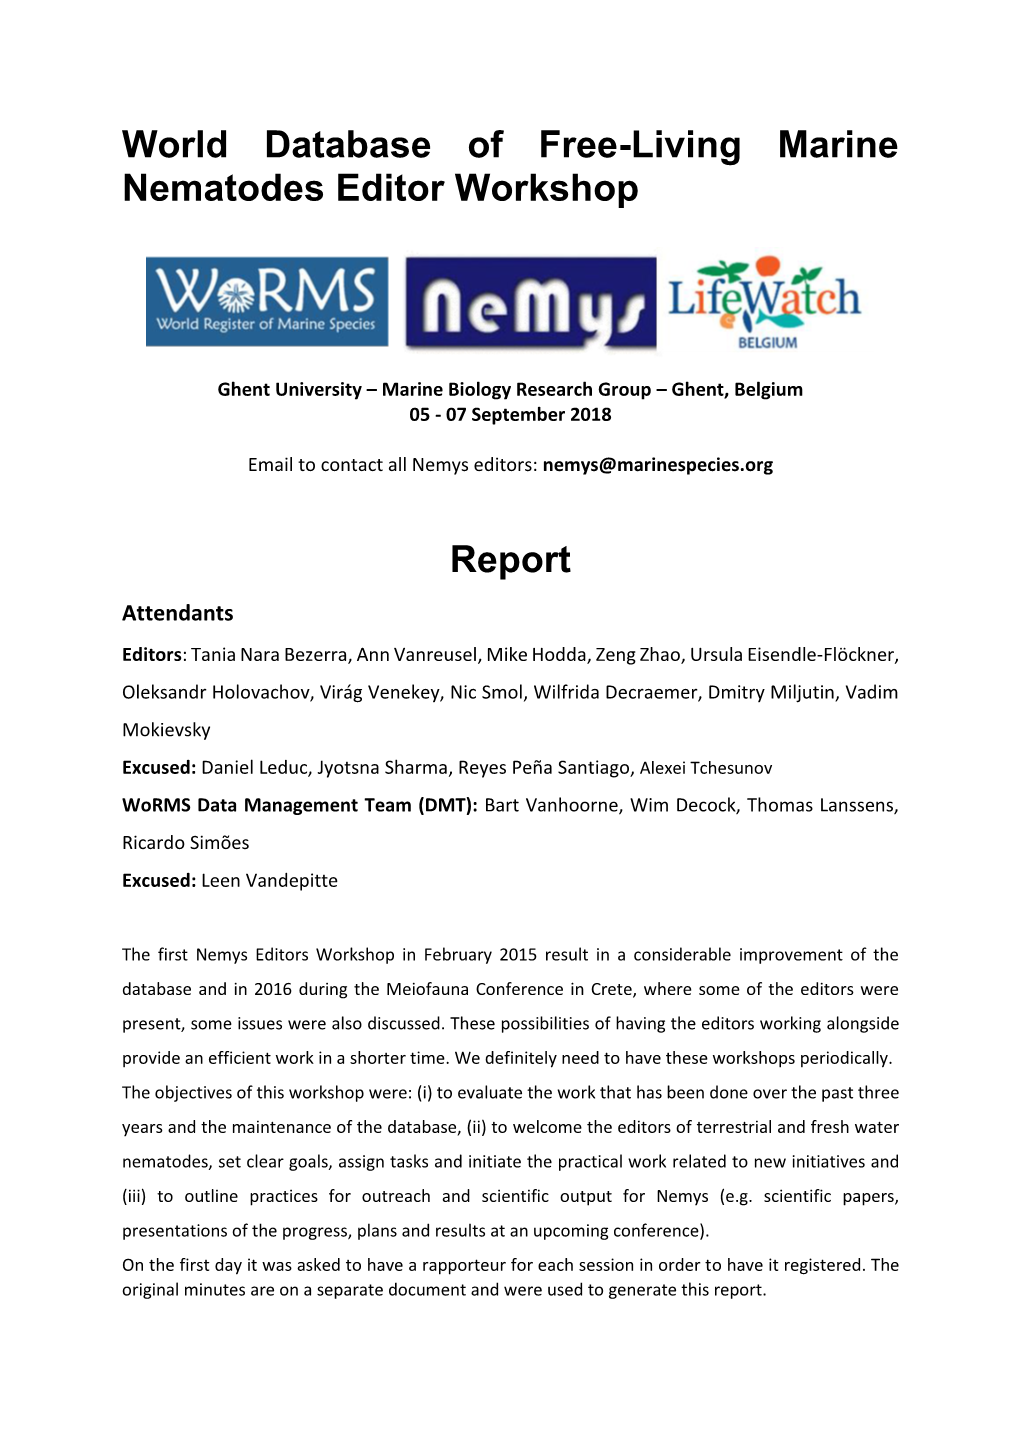 World Database of Free-Living Marine Nematodes Editor Workshop Report